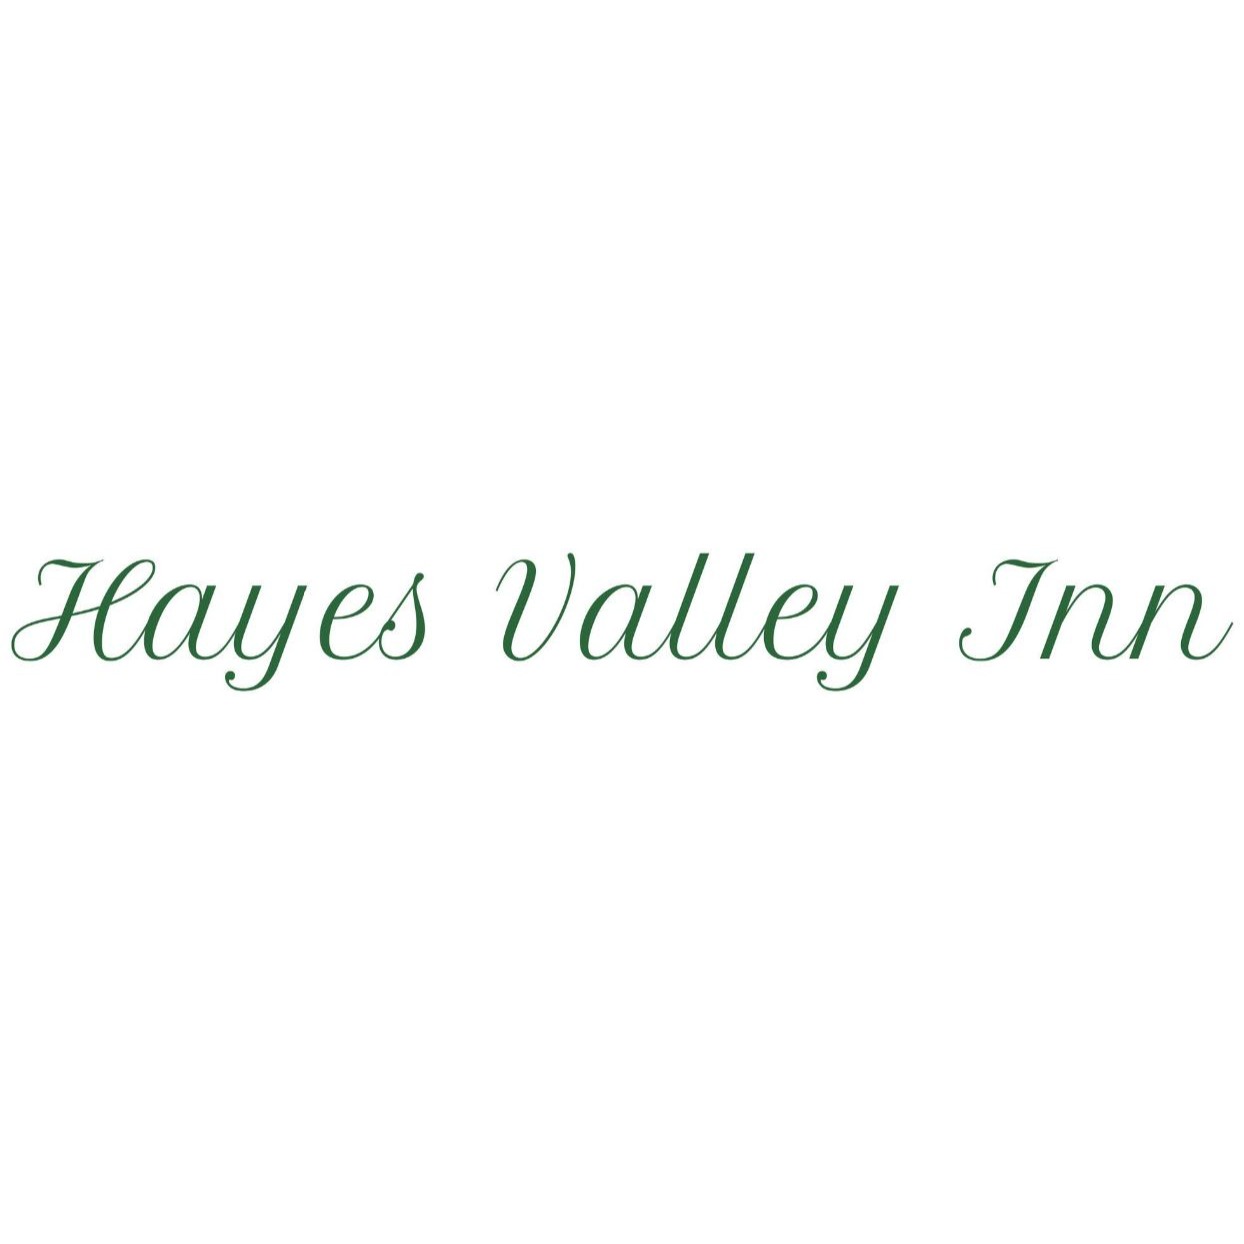 Hayes Valley Inn - San Francisco, CA 94102 - (415)862-9051 | ShowMeLocal.com